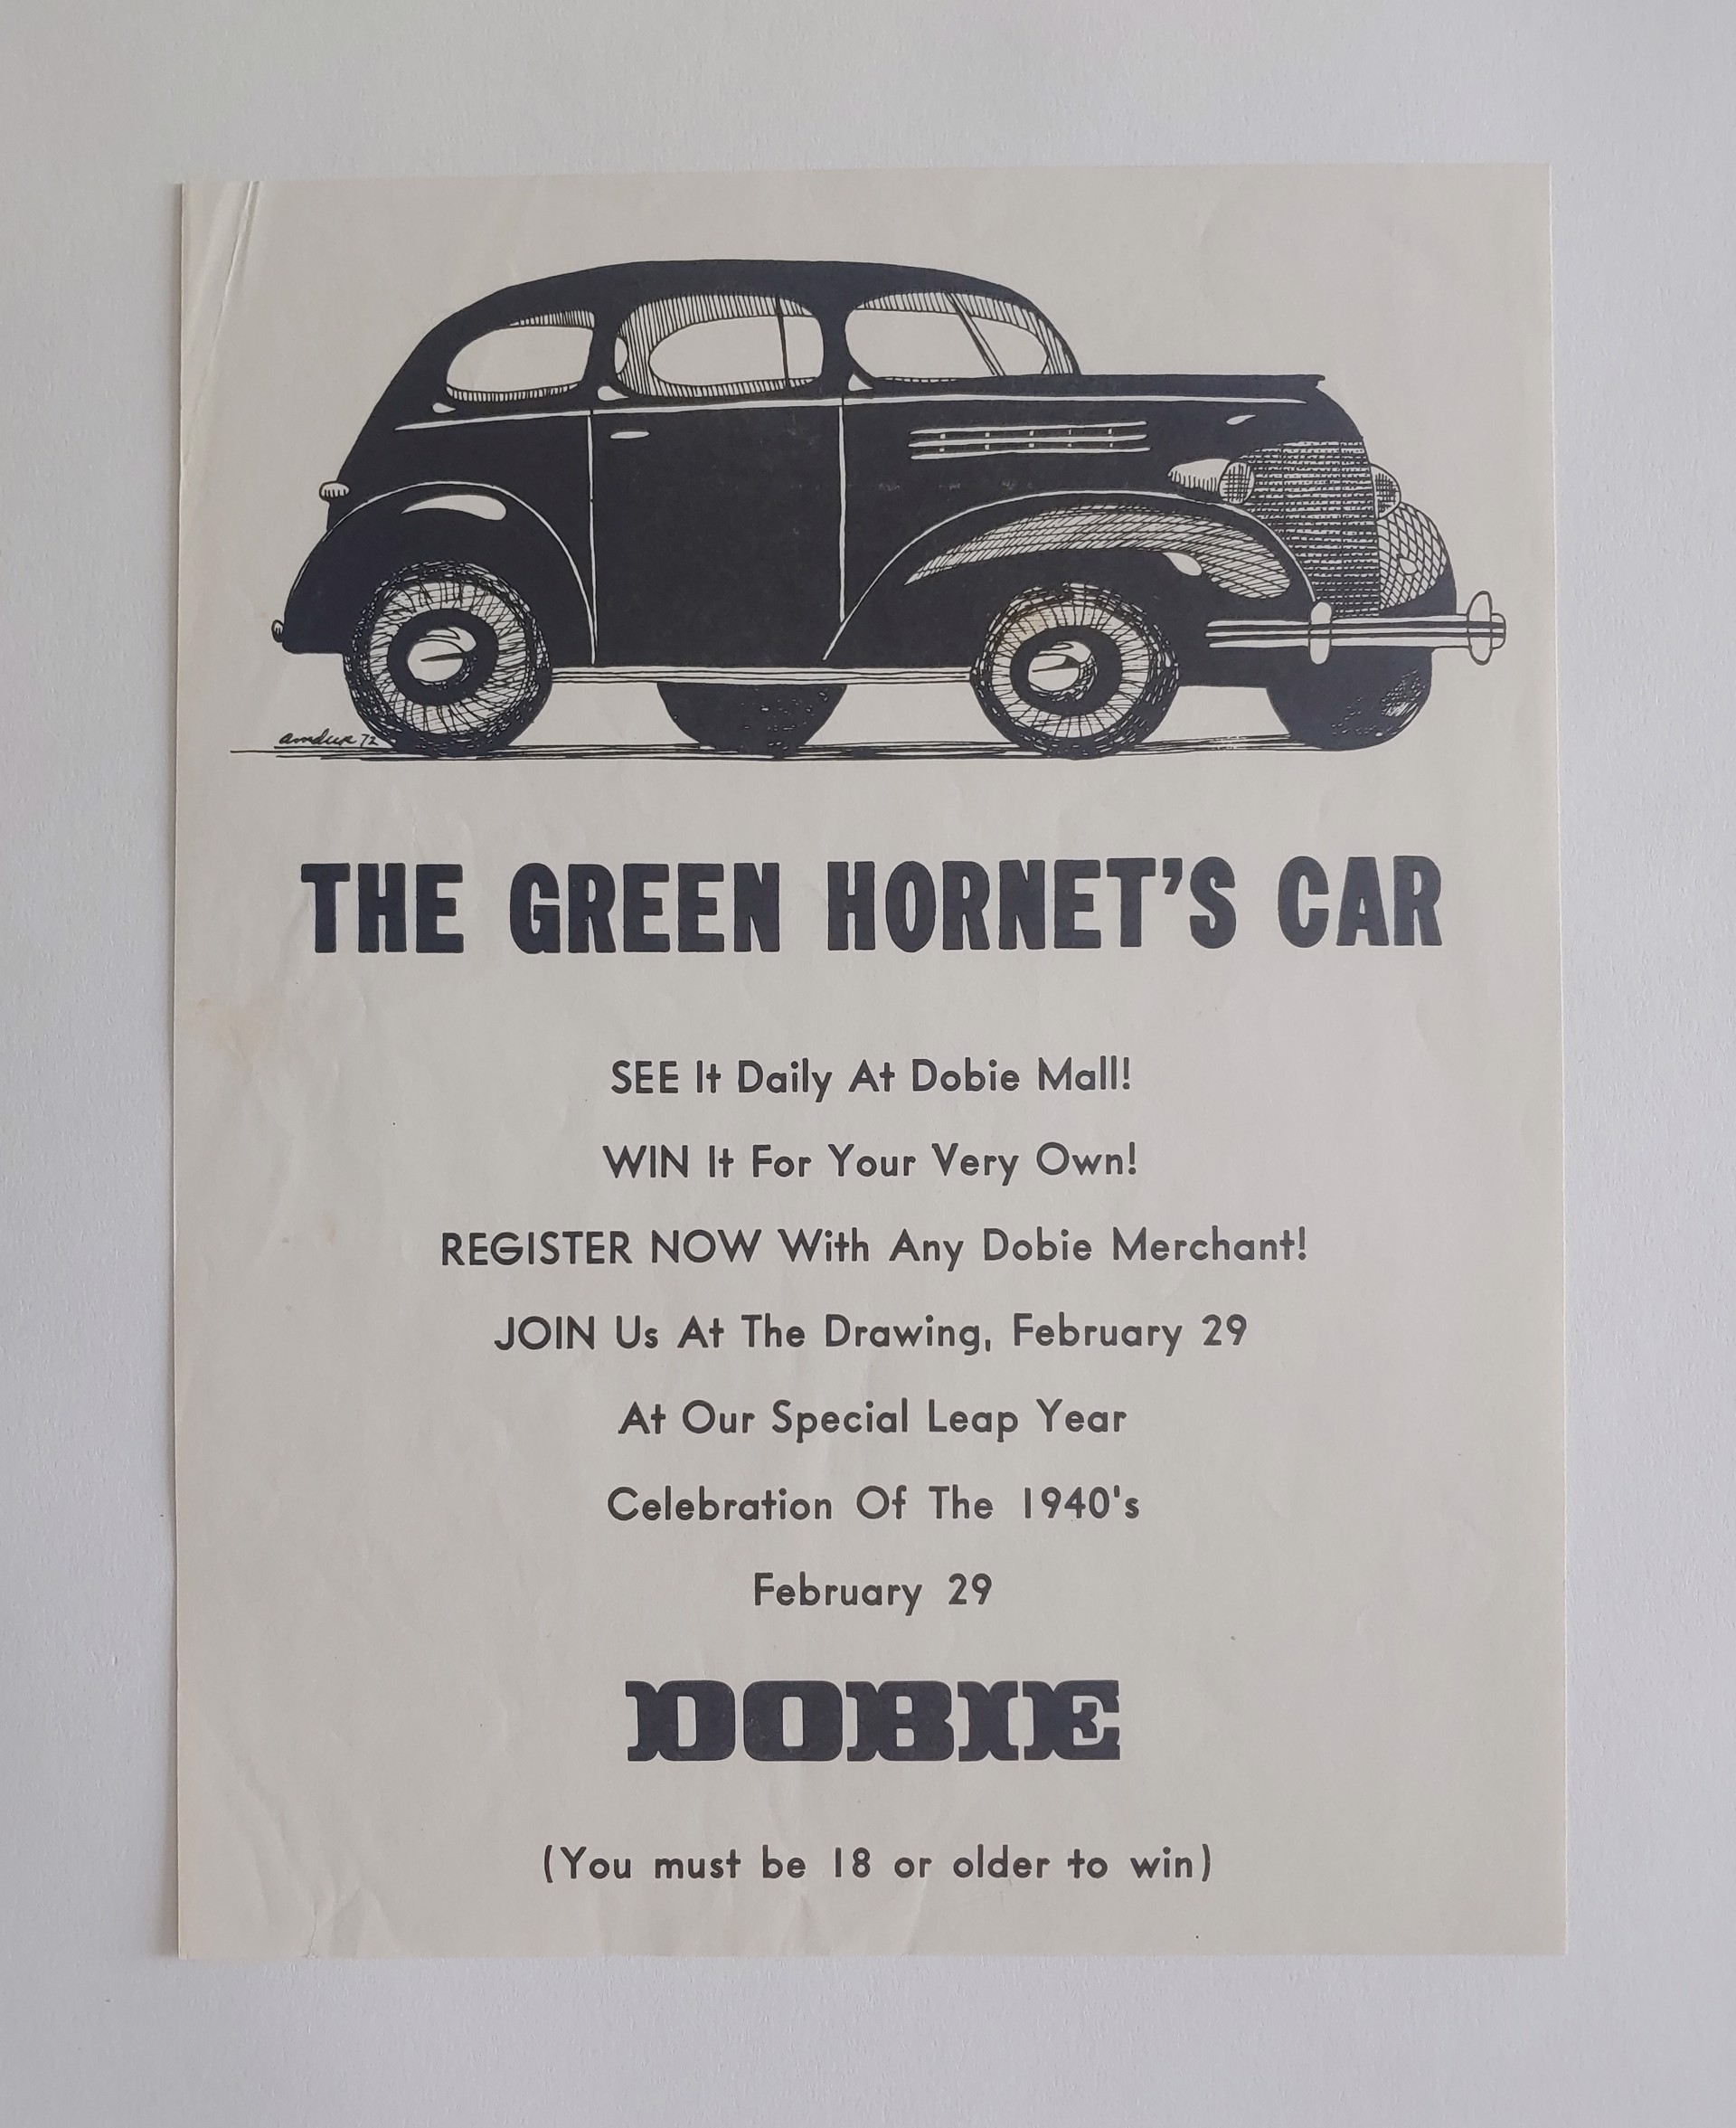 Green Hornet's Car at Dobie Mall - Poster by David Amdur